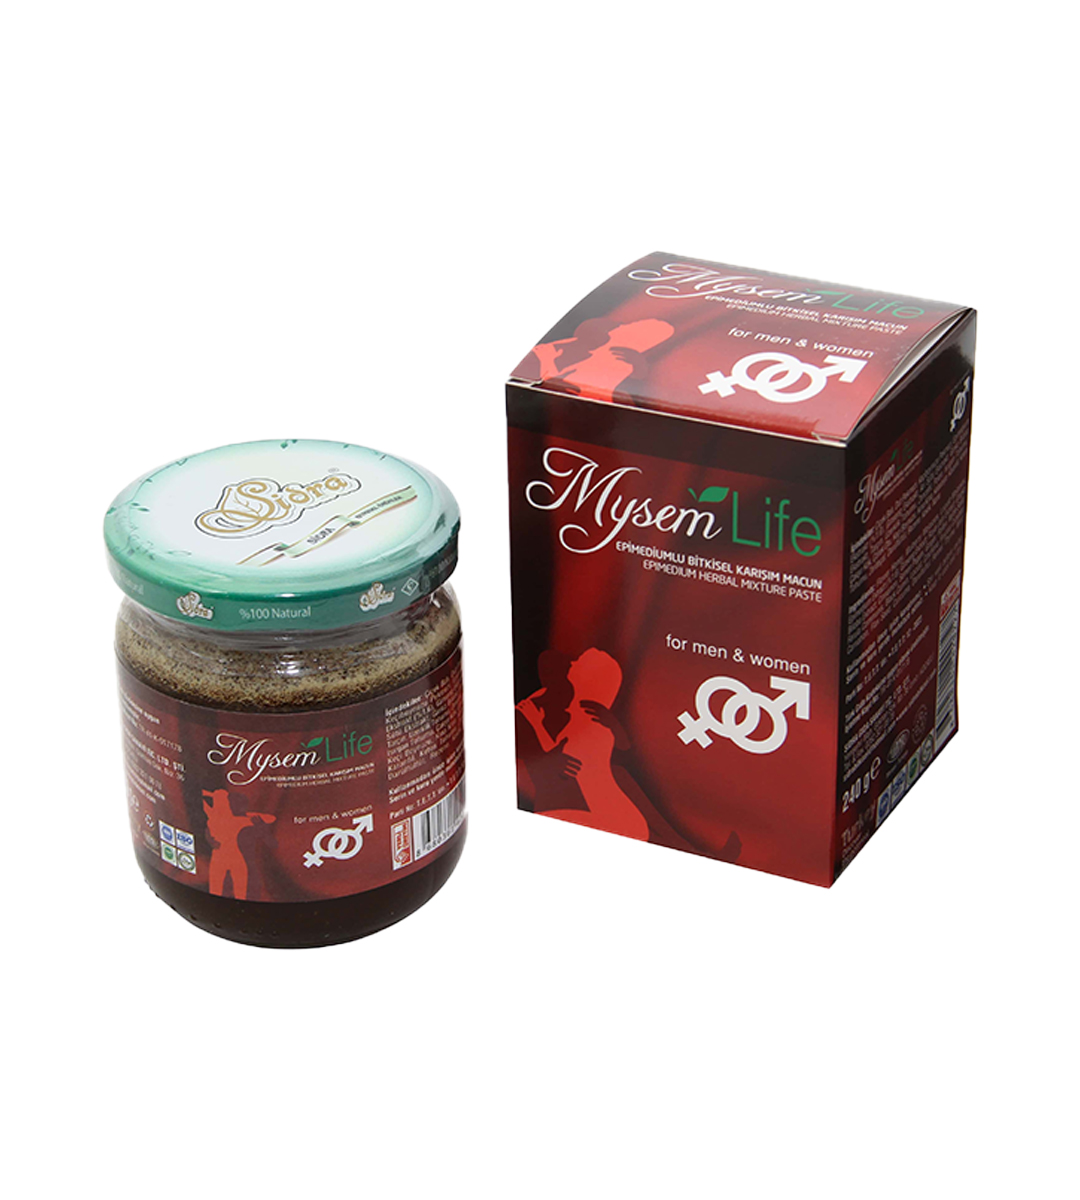 100% Natural and Safe Themra Epimedium Turkish Honey Blend - Turkish Paste,  8.46 oz - 240g